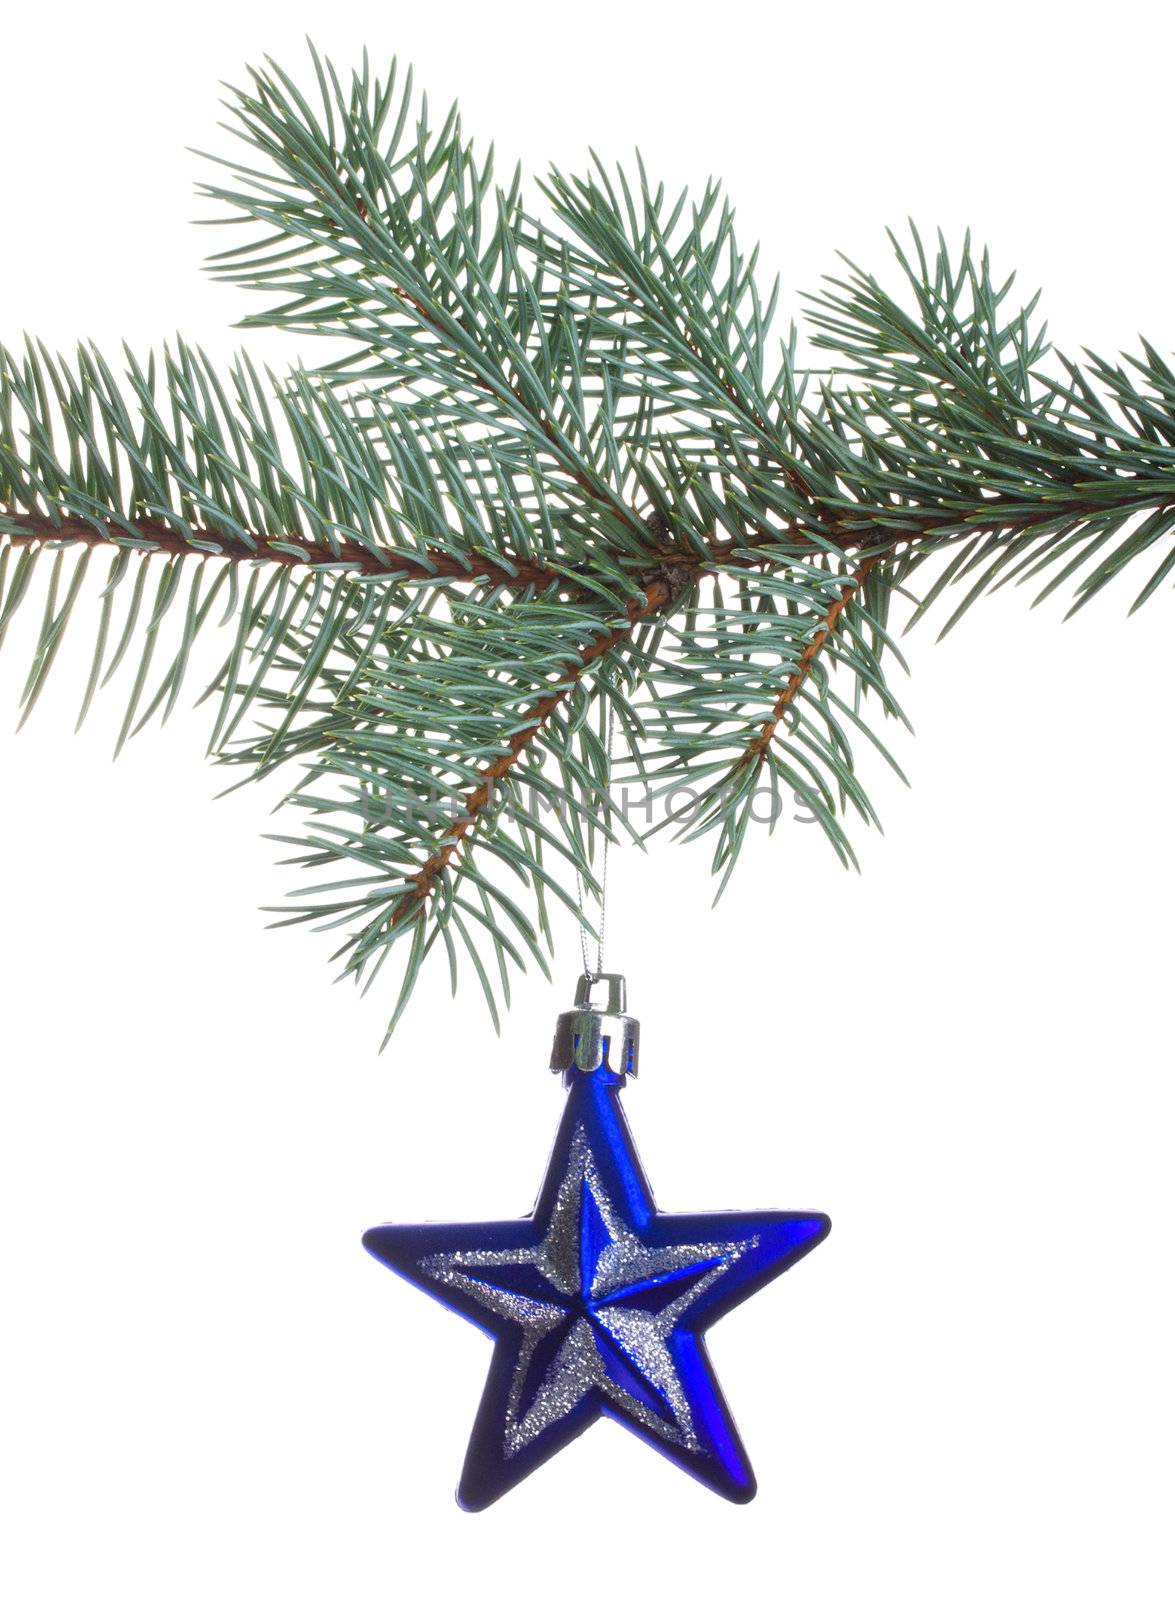 blue star on fir branch by Alekcey